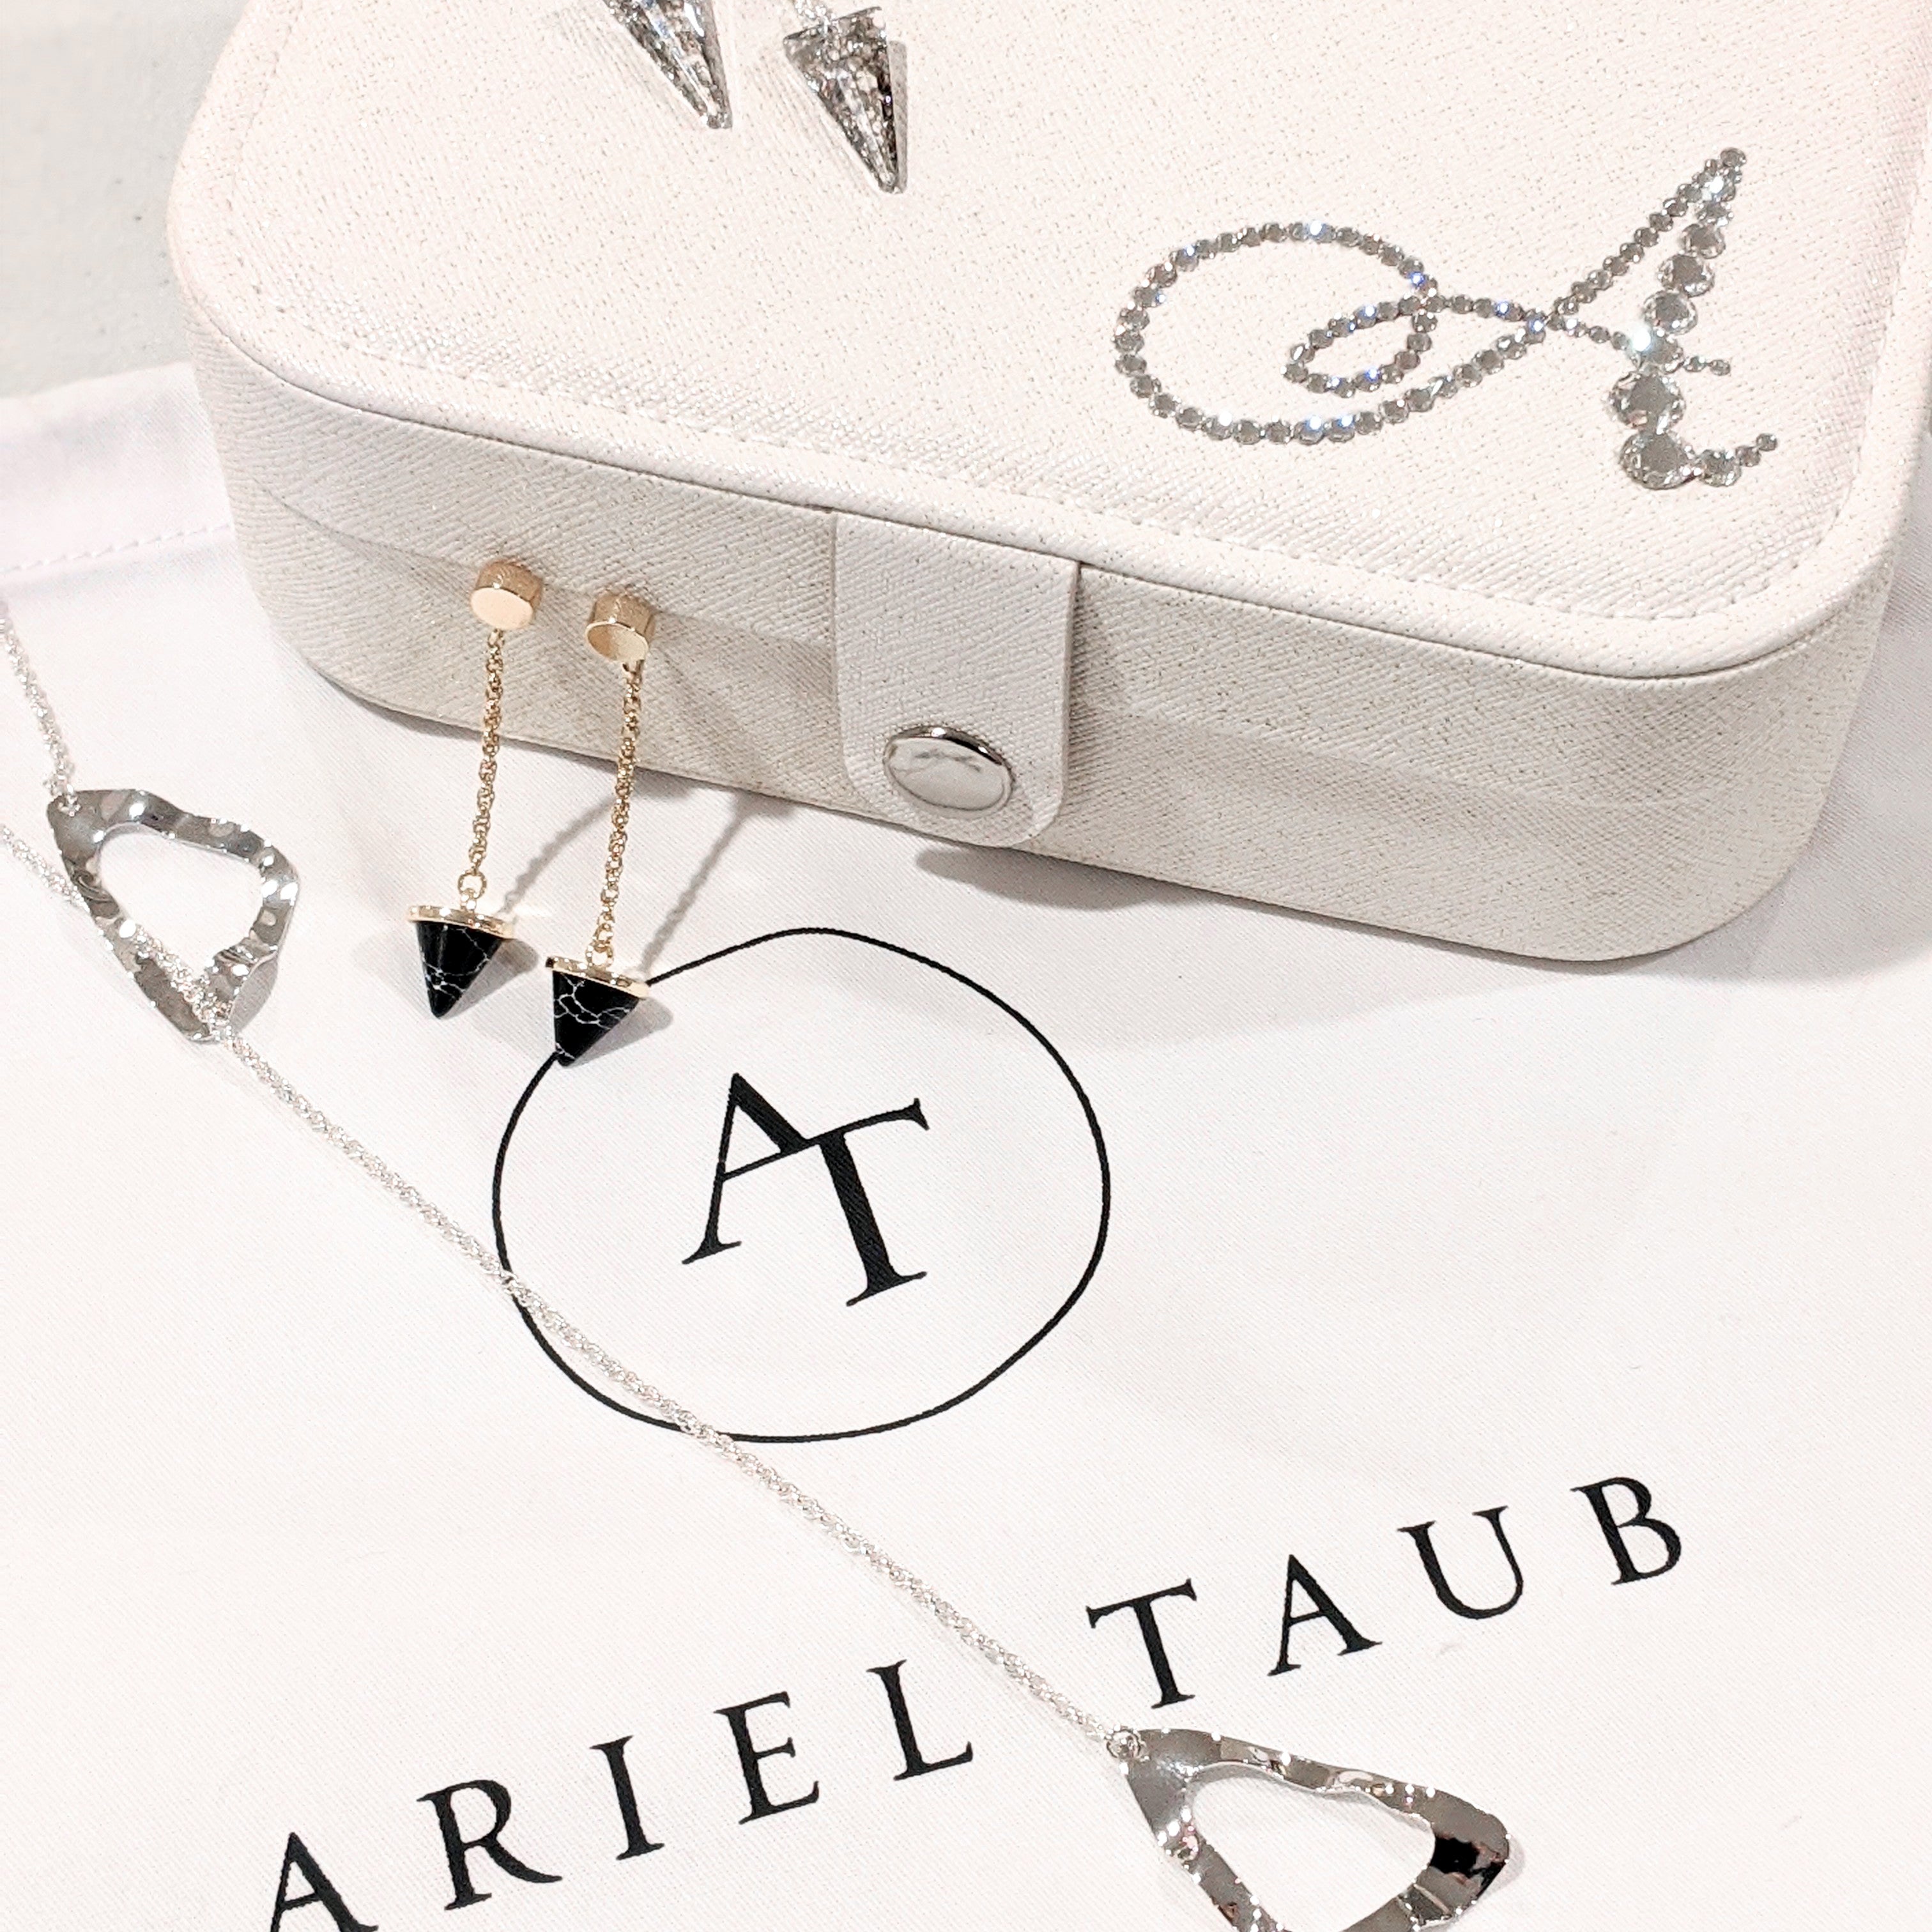 Dive into Personalization: Explore Ariel Taub's Unique Product Range